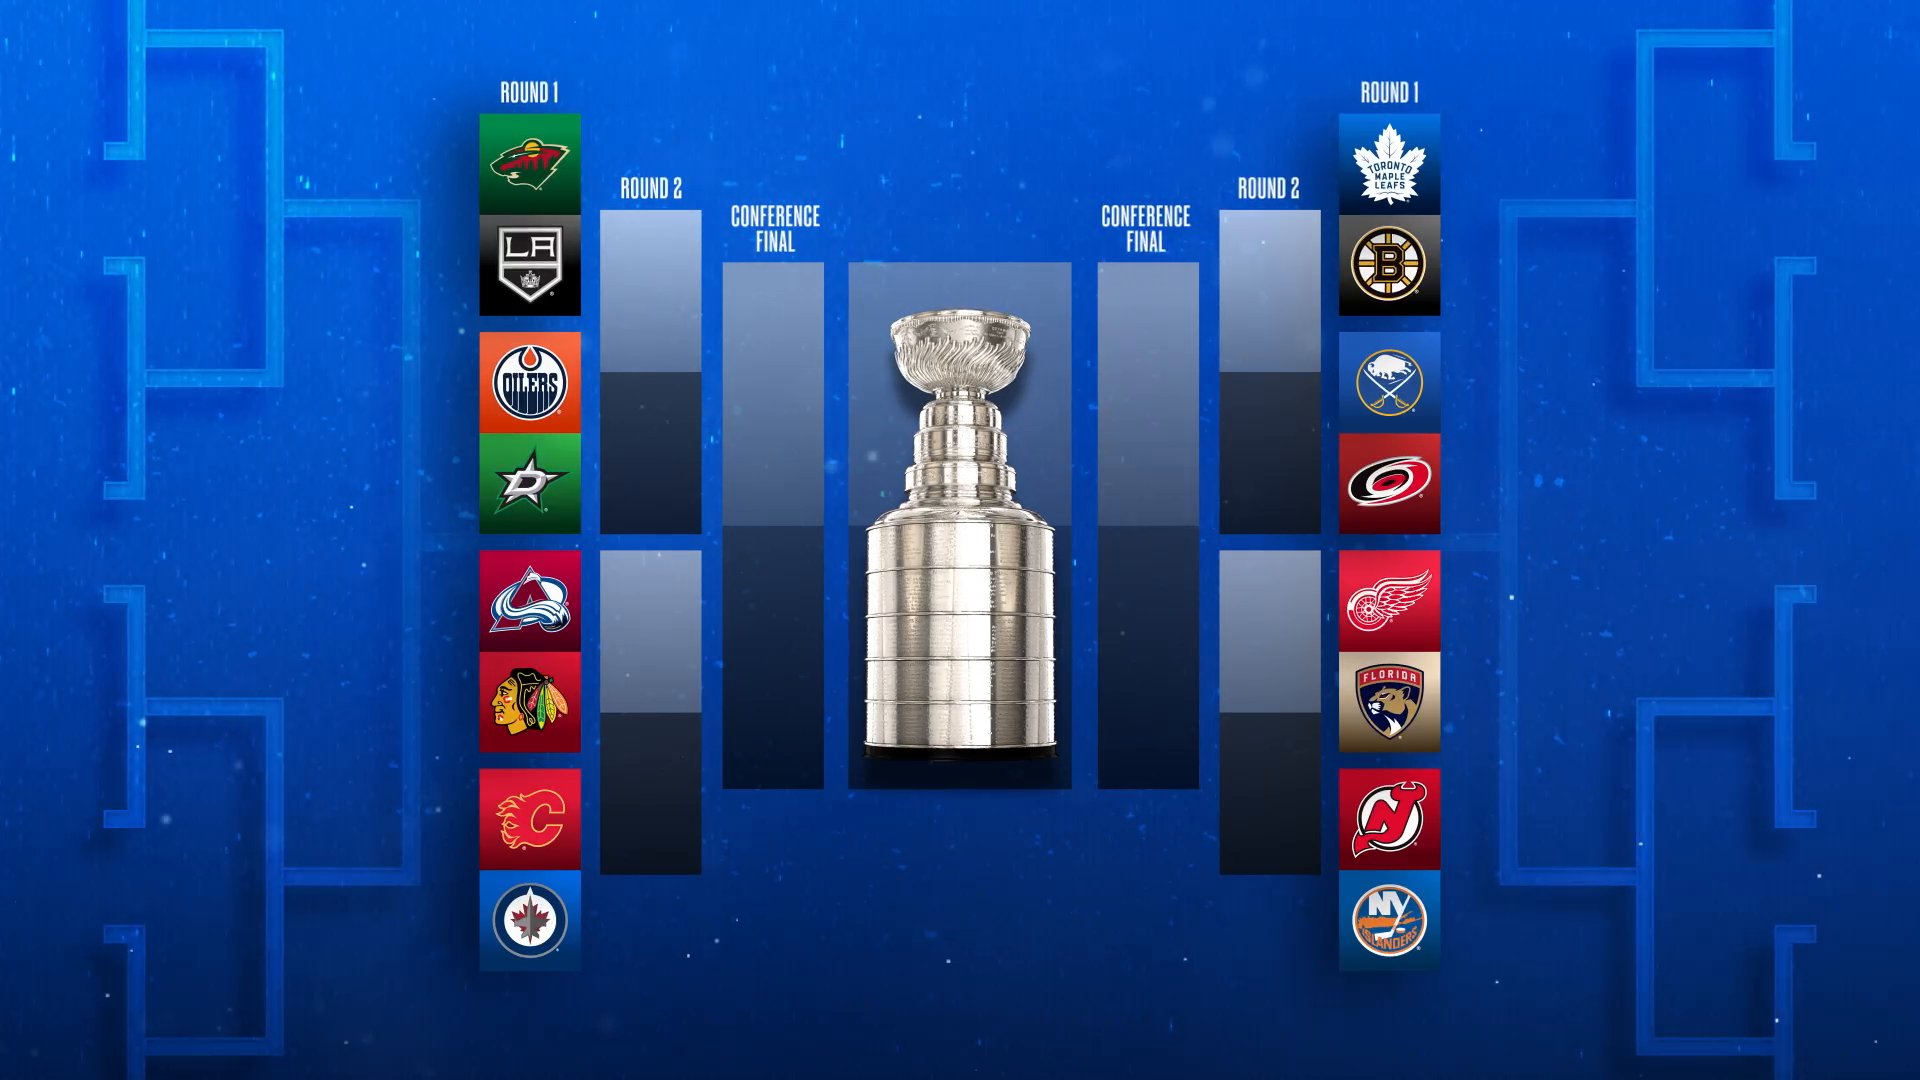 2017 Stanley Cup Playoffs Bracket: Conference Finals